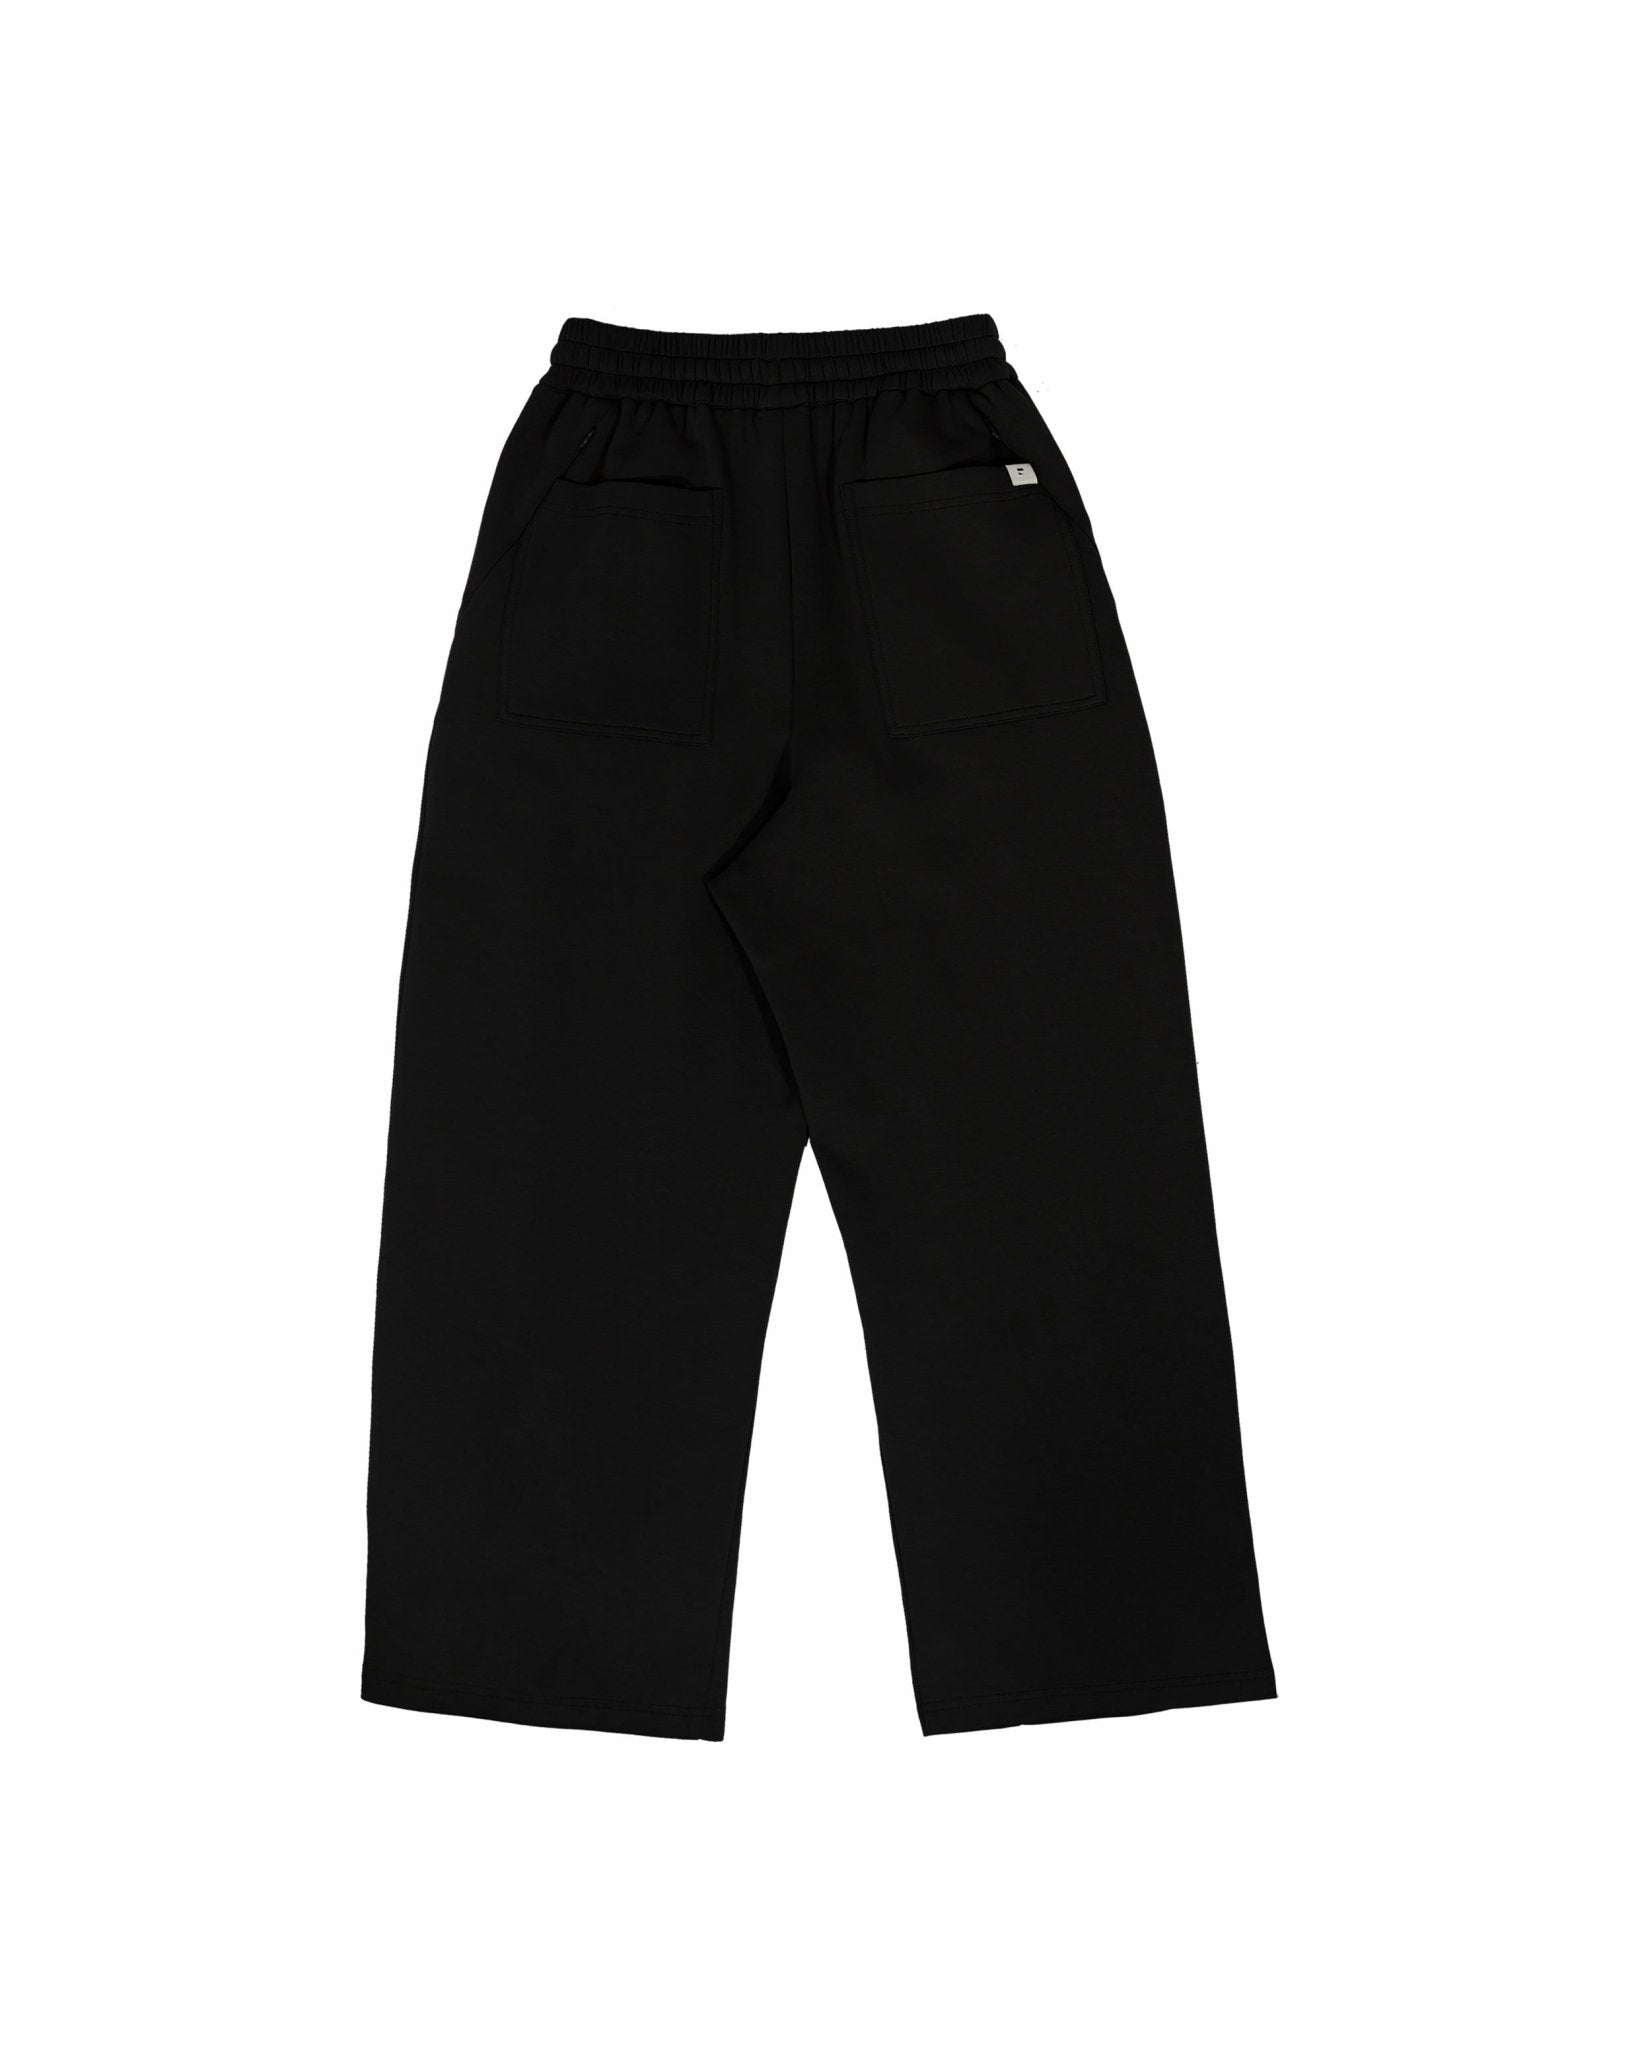 Pleated Sweatpants - Black - G R A Y E